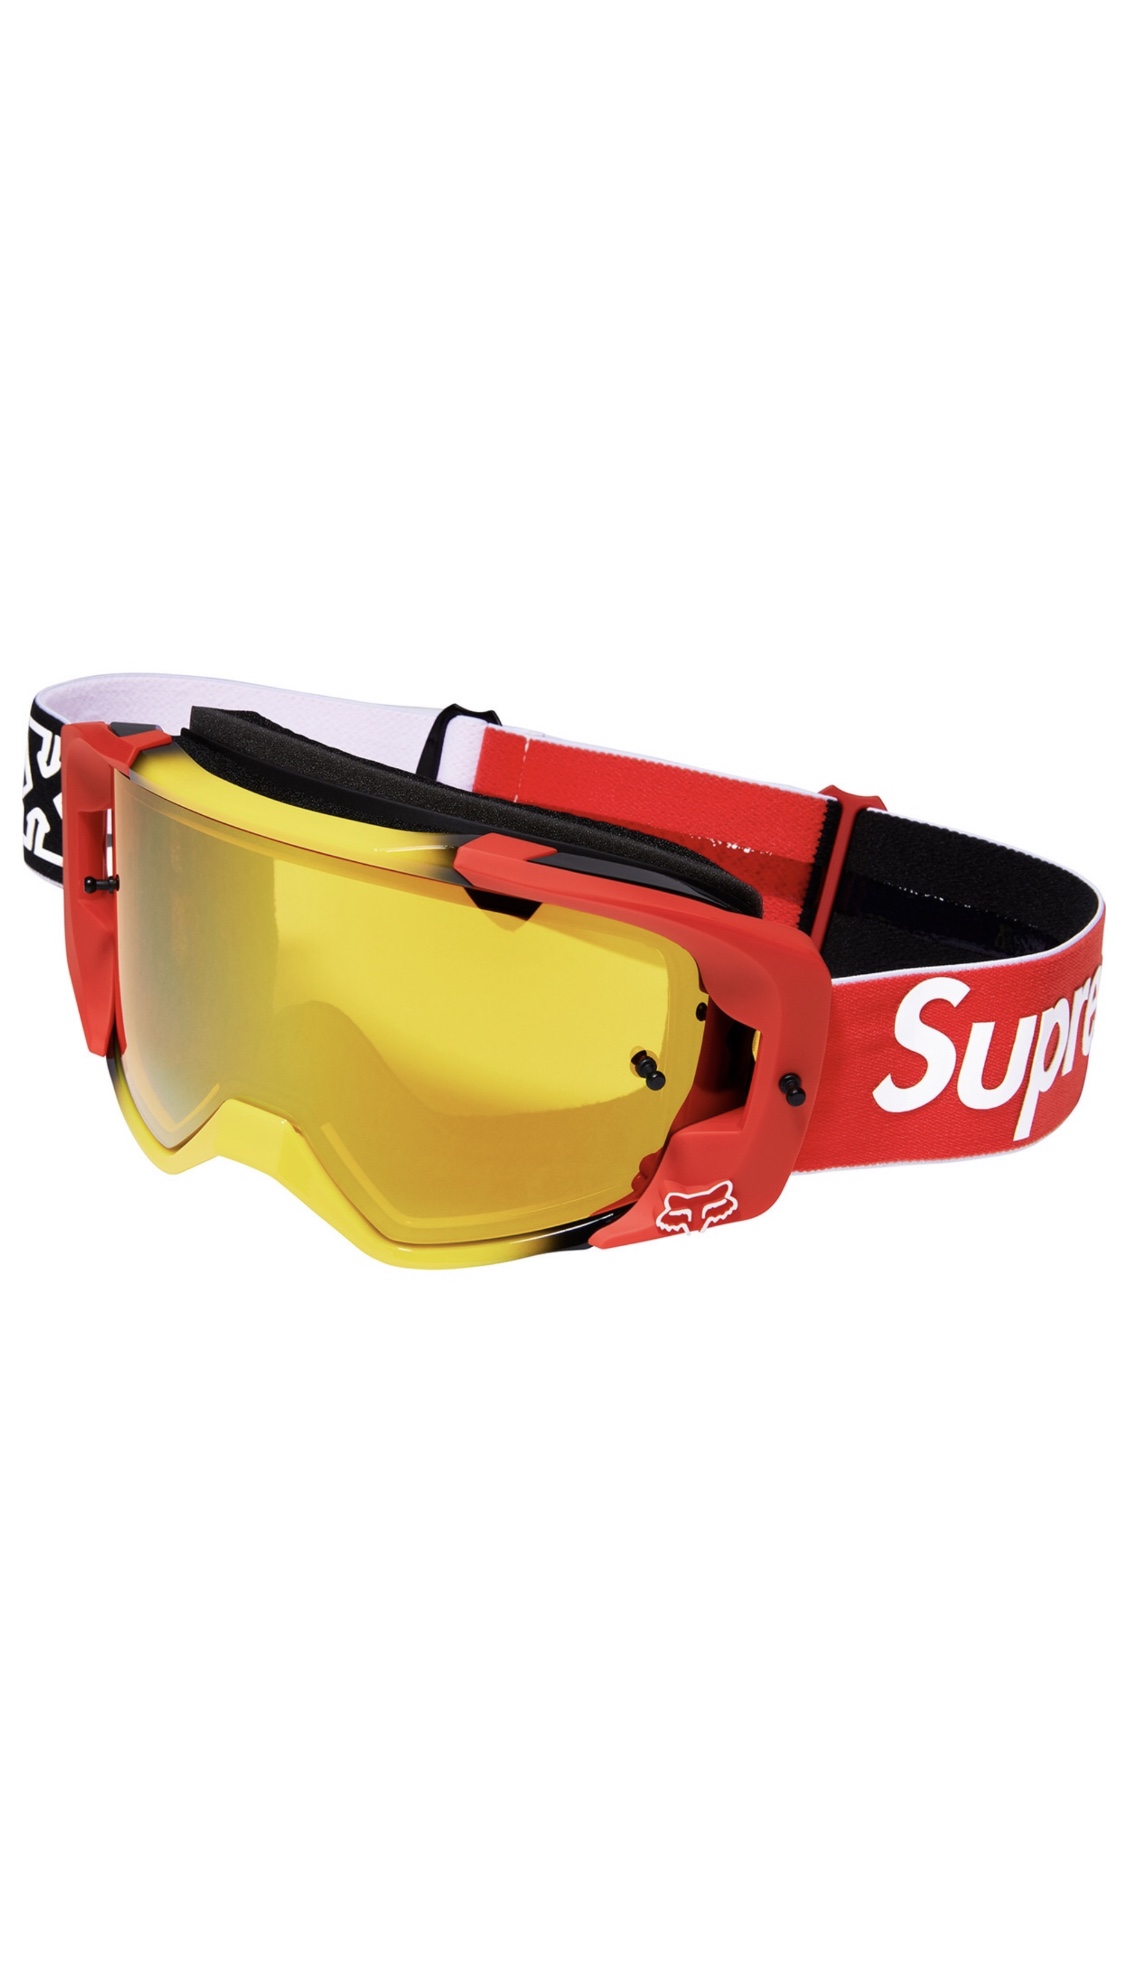 AuthentKicks | Supreme®/Honda® Fox® Racing Vue Goggles – Red